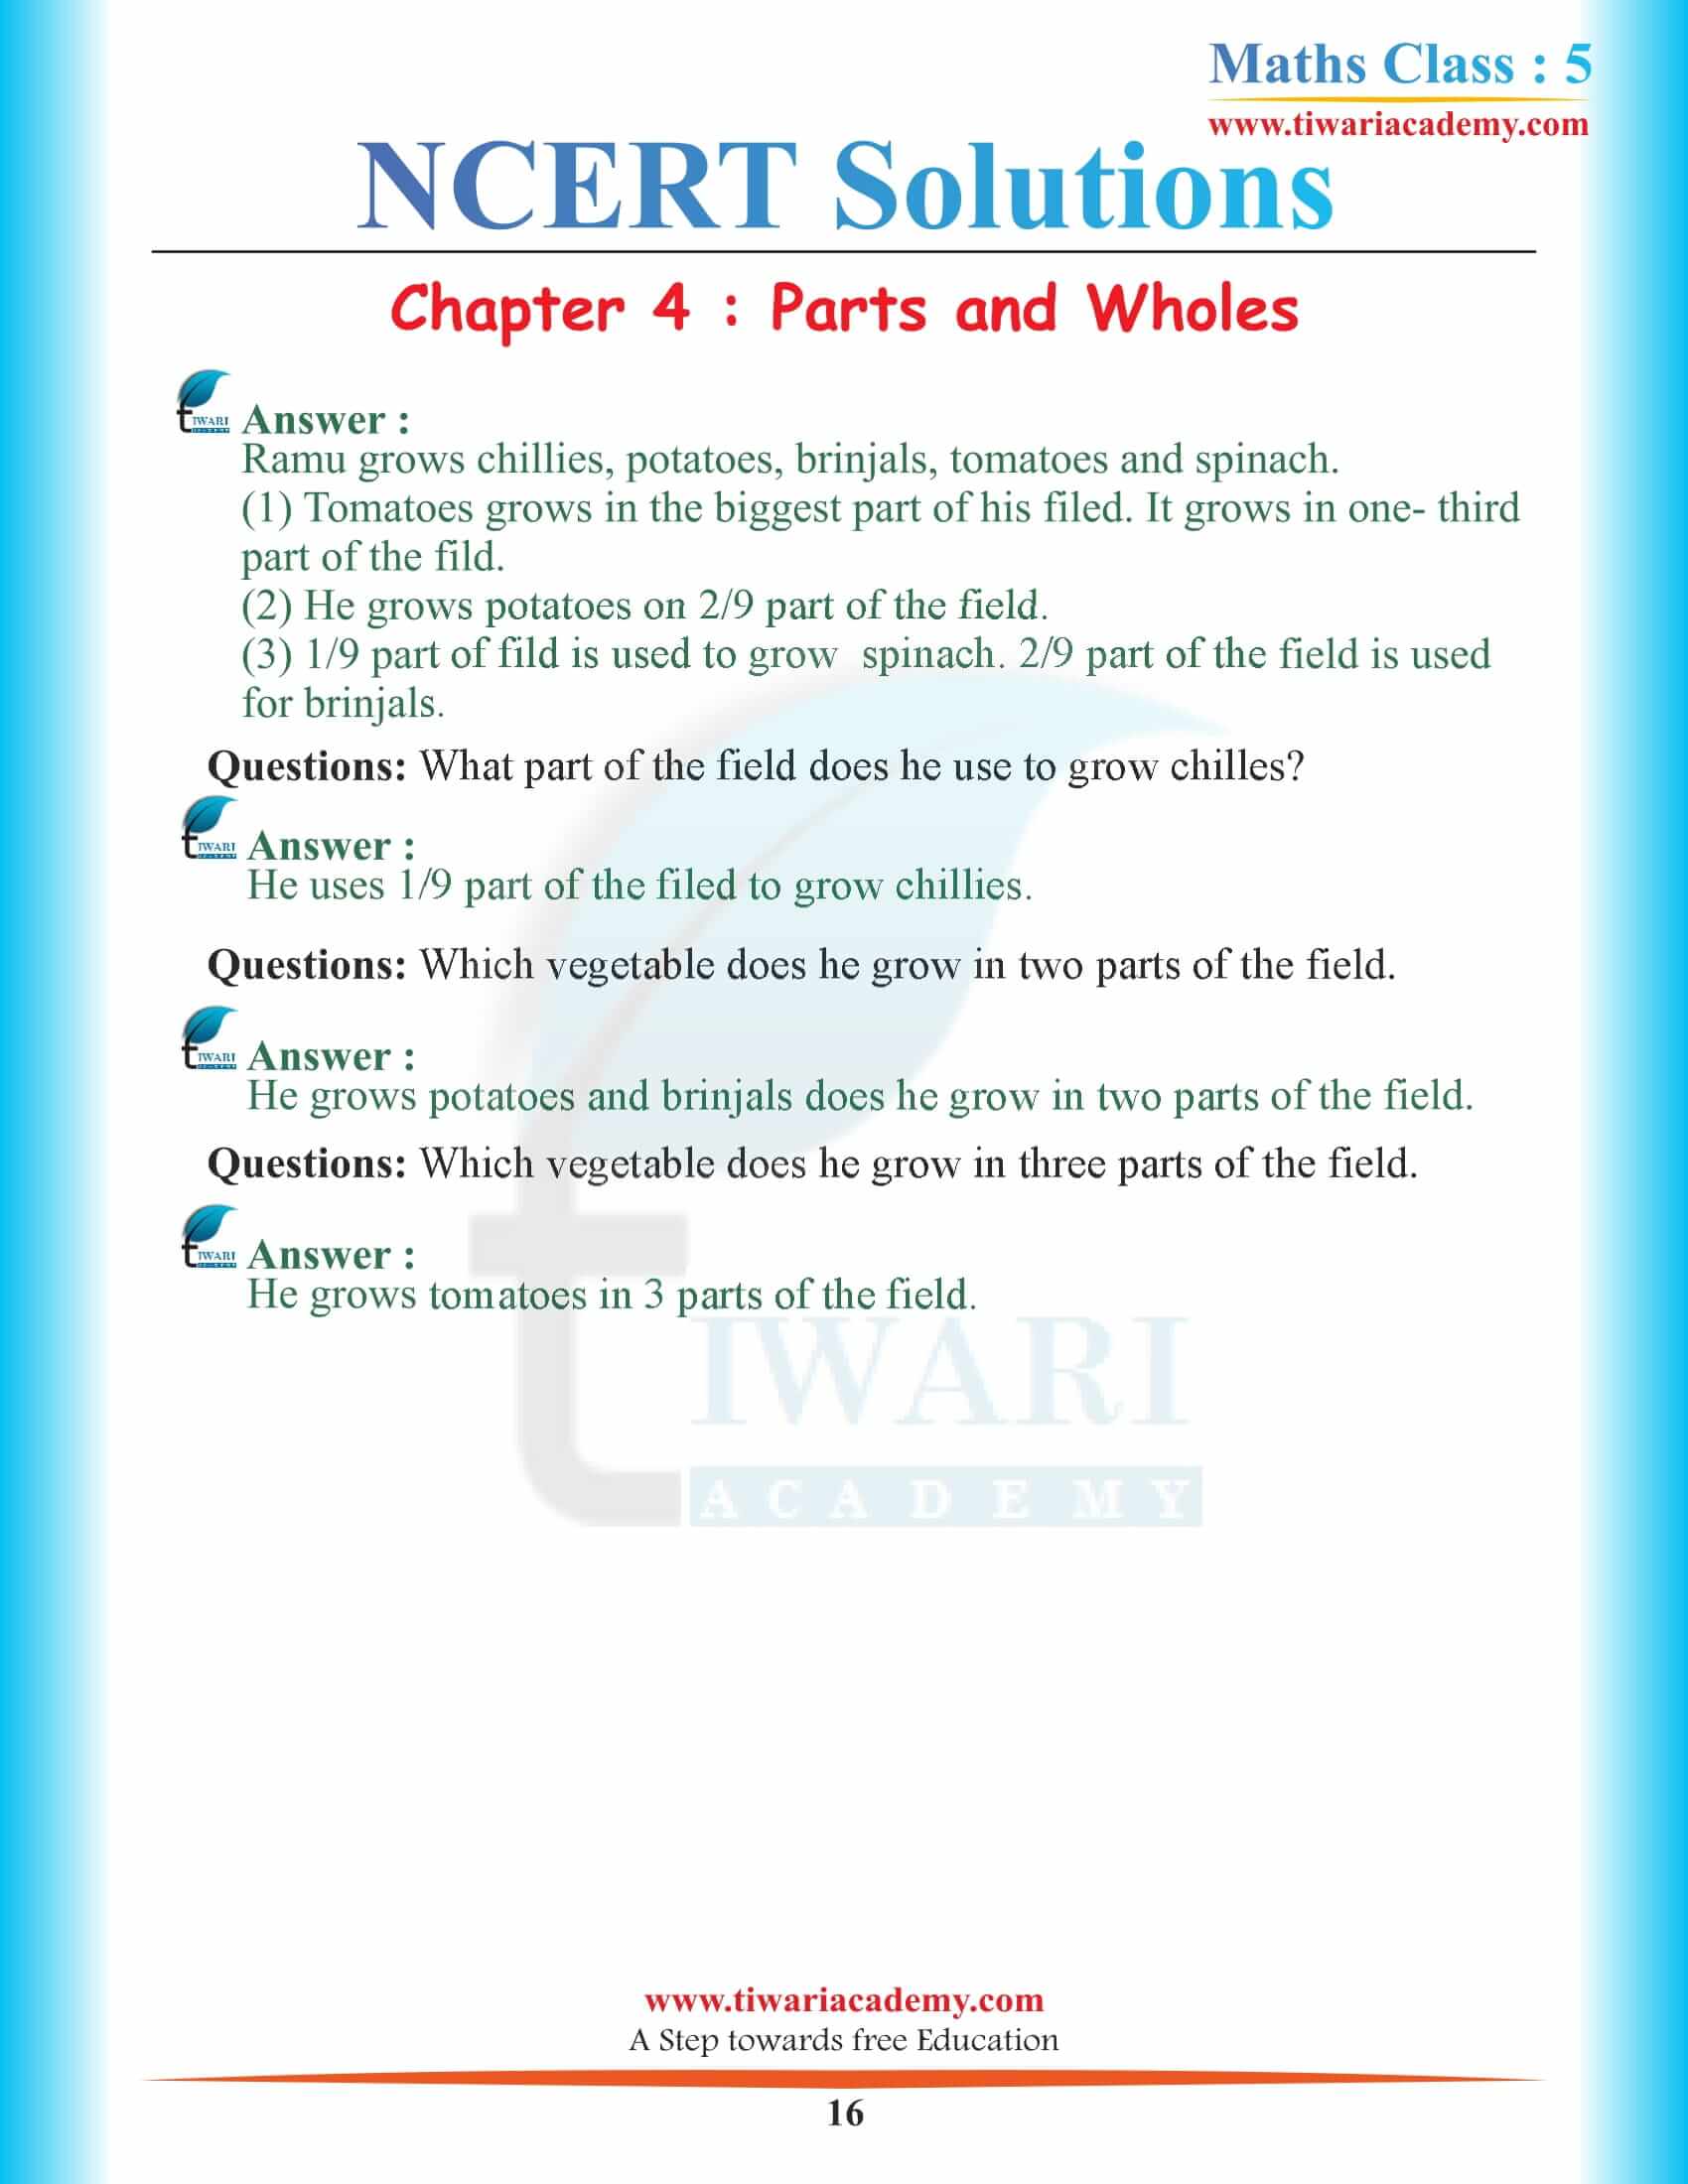 Class 5 NCERT Maths Solutions Chapter 4 free download